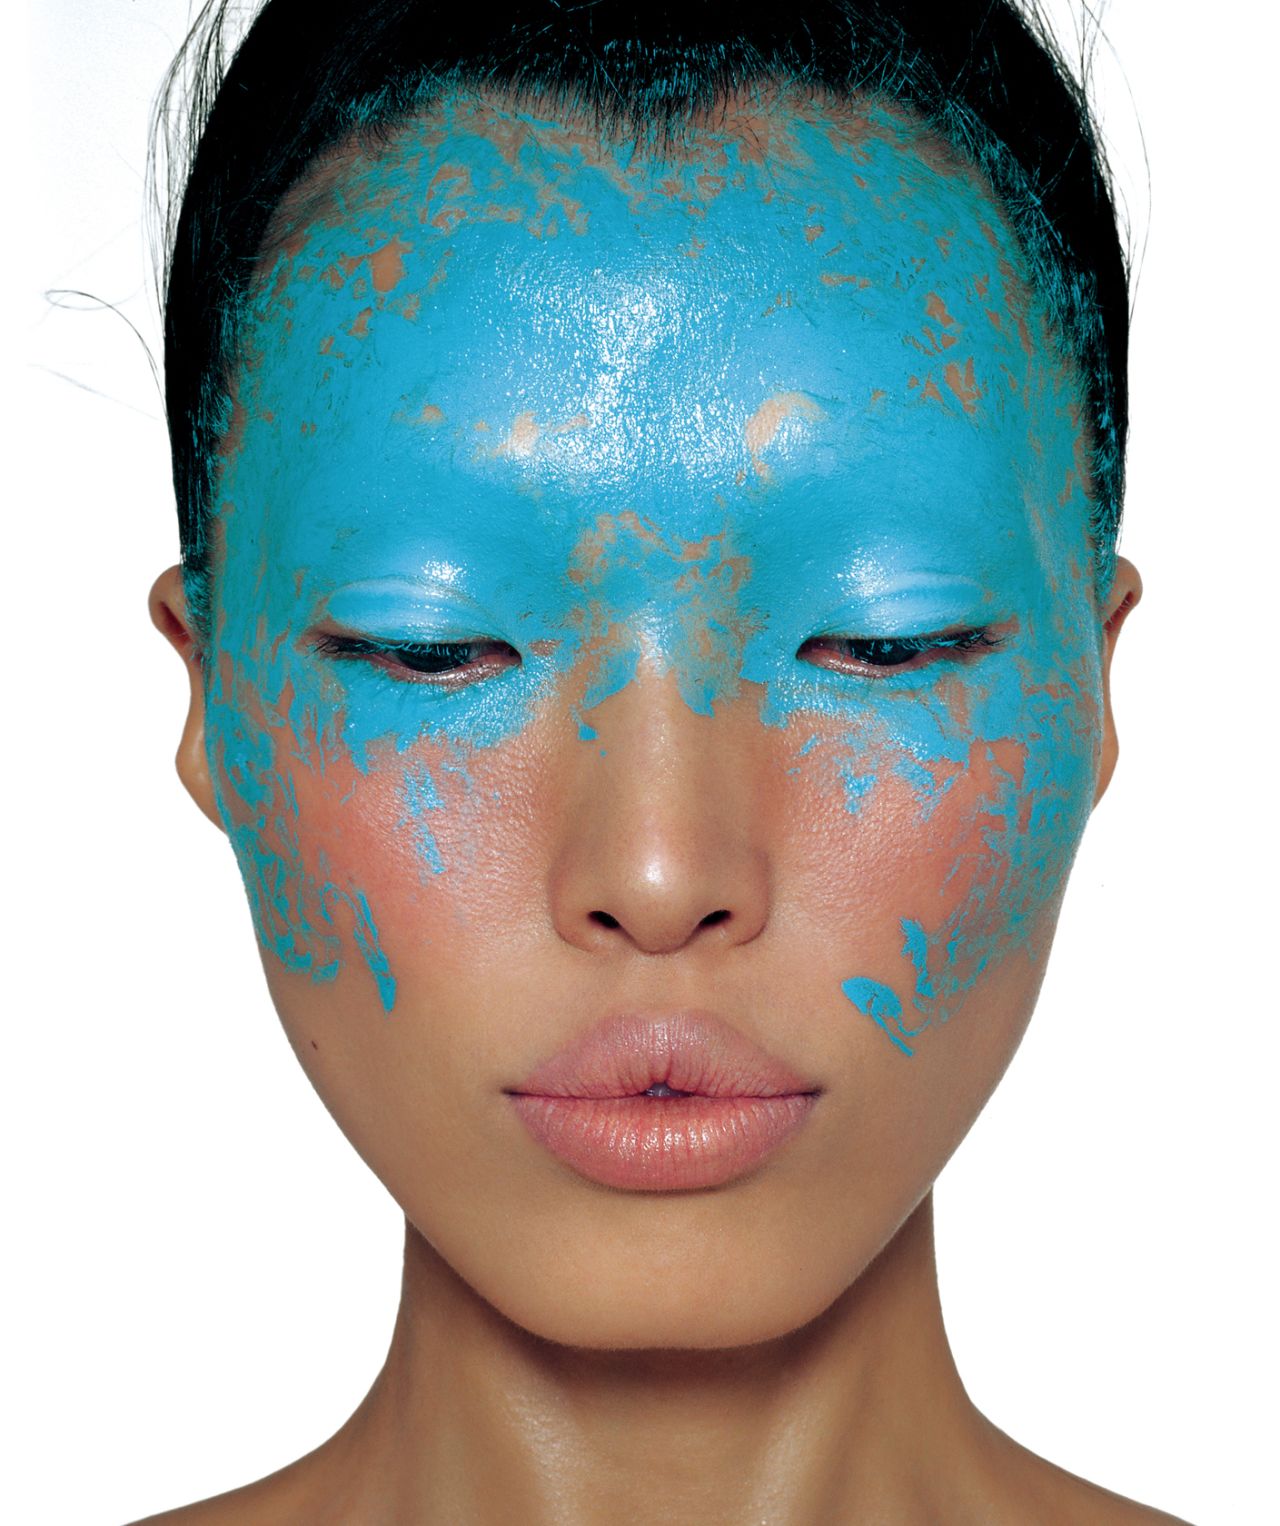 "Blue Face," a photograph by Chen Man.